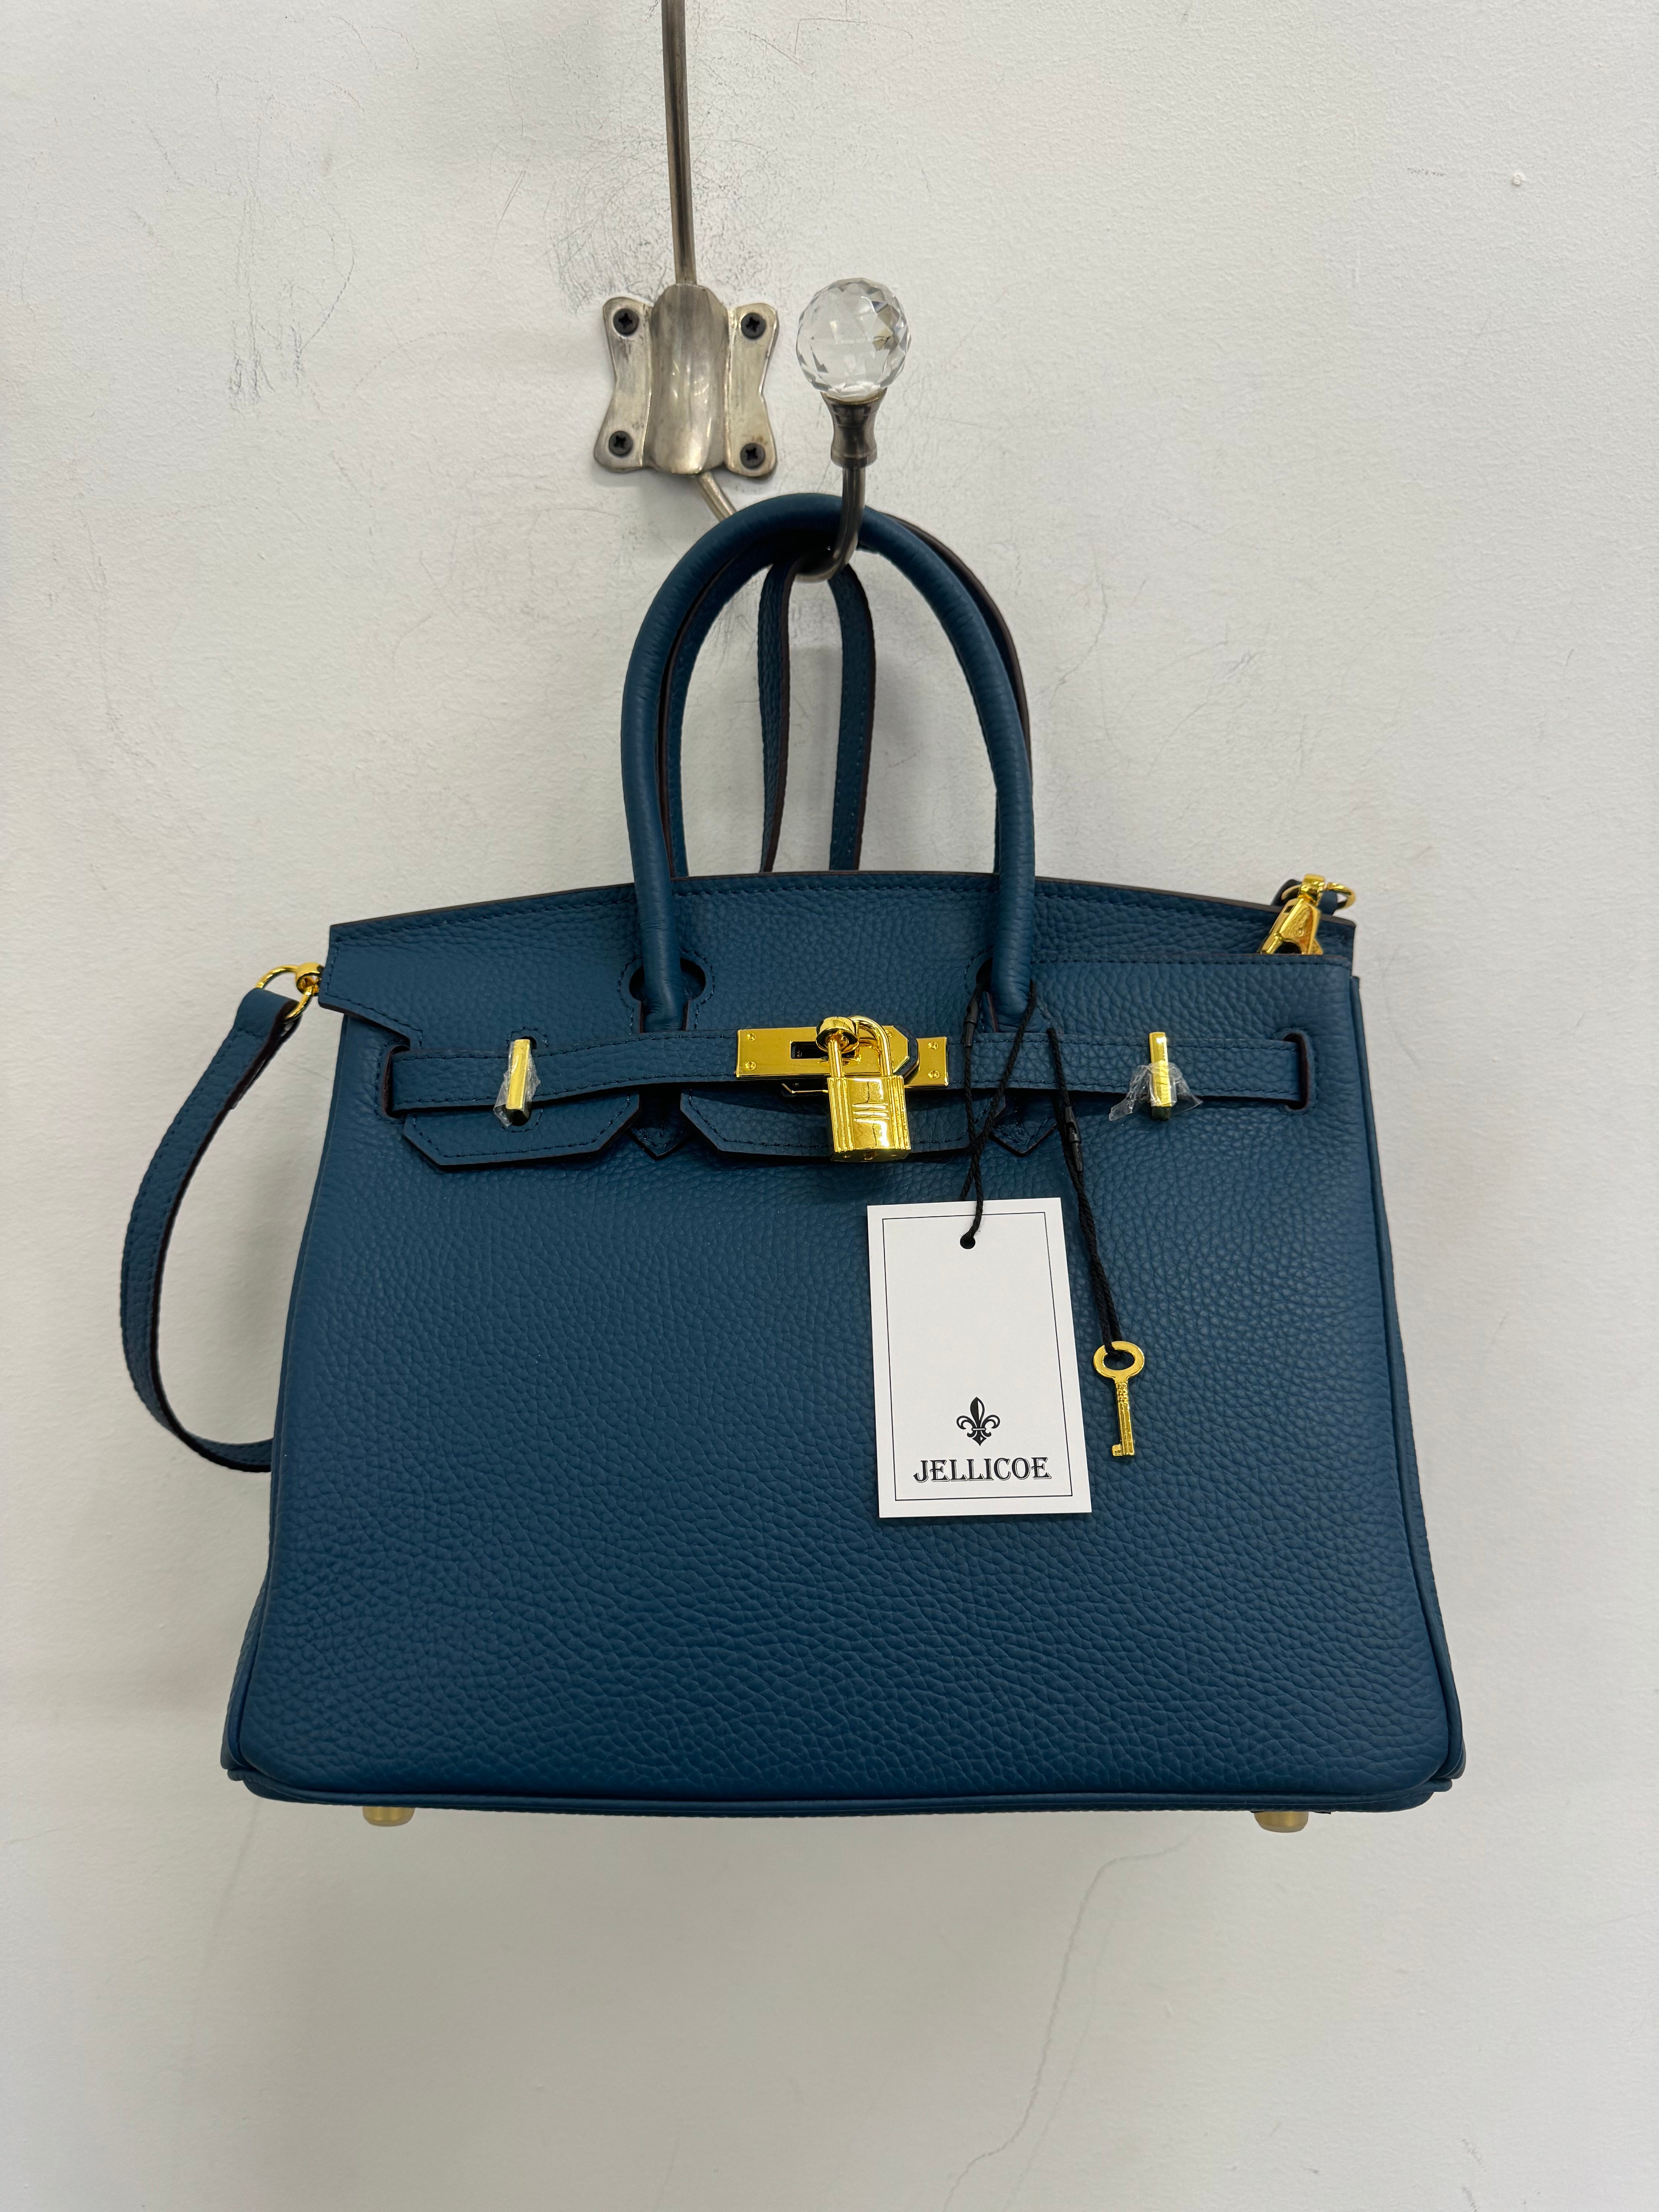 Jellicoe Priscilla Leather Handbag Teal